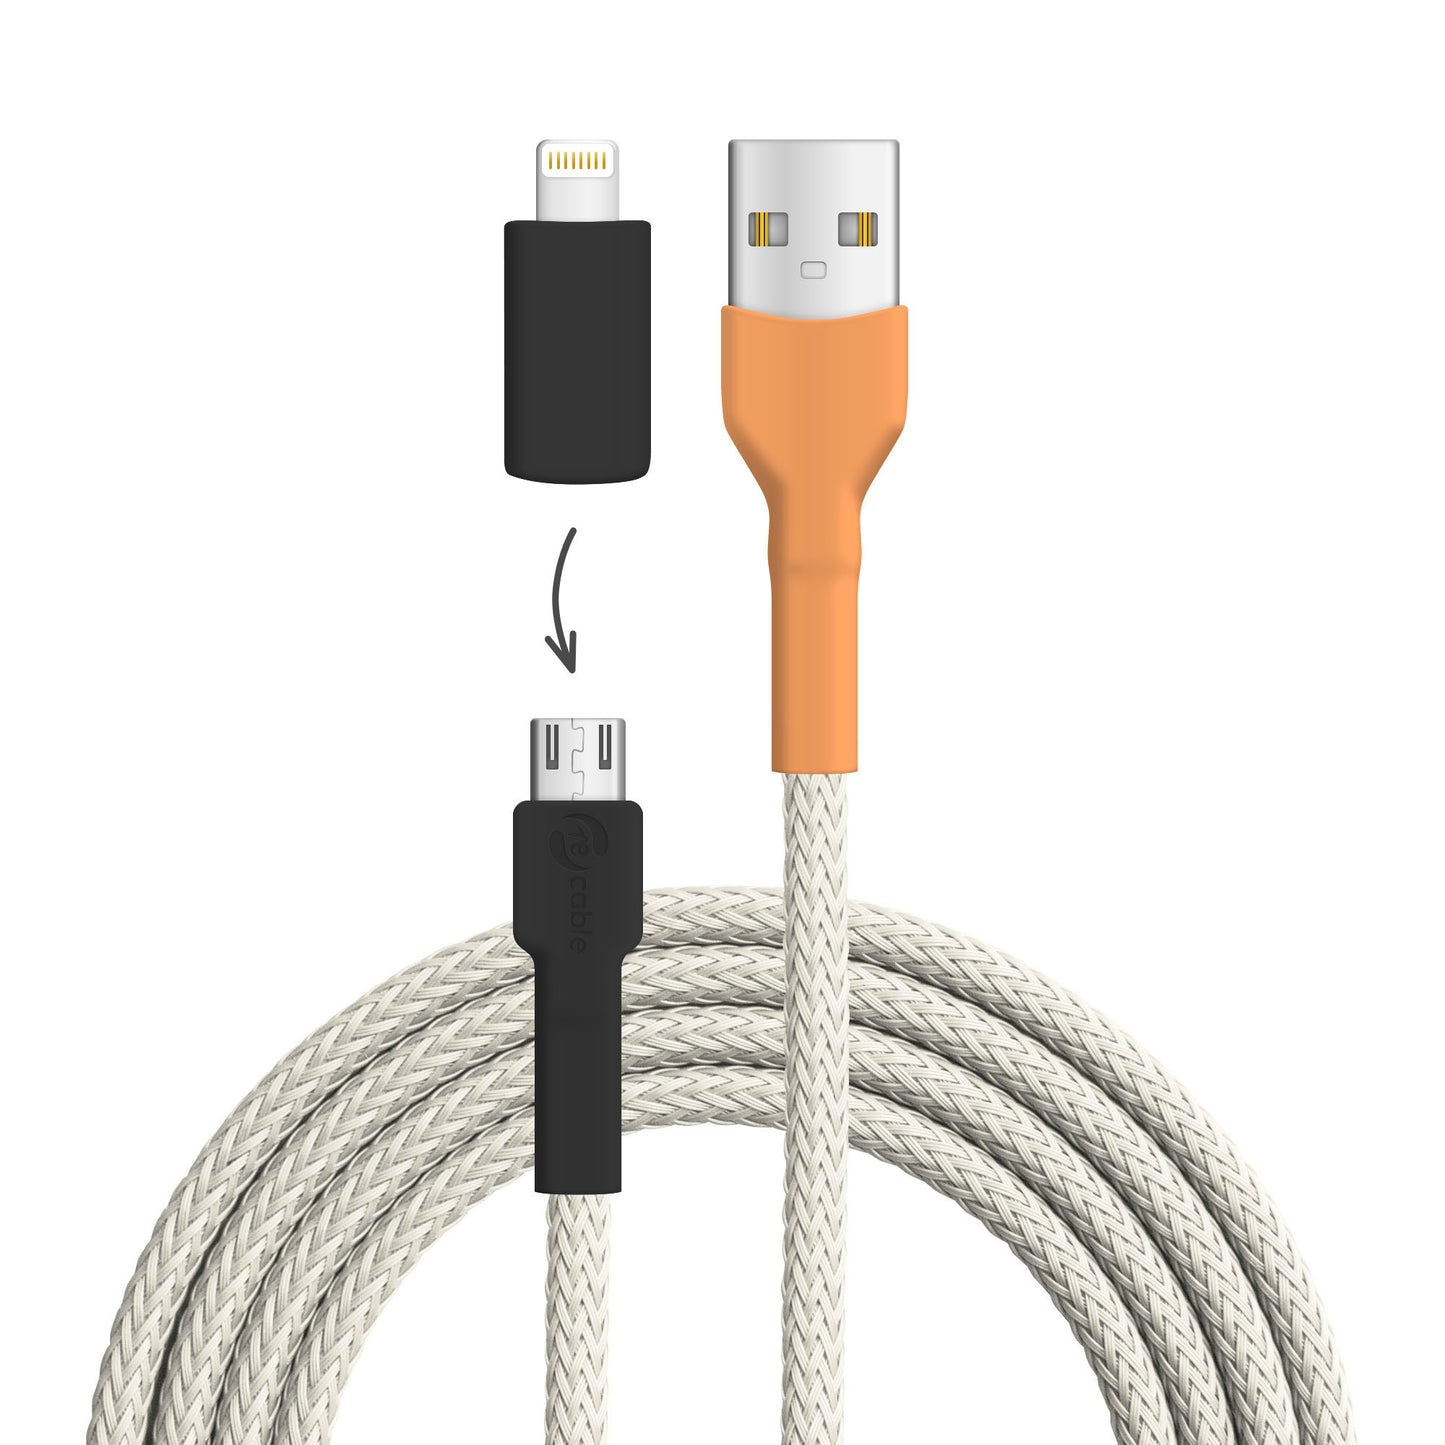 USB-Kabel, Design: Königs­pinguin, Anschlüsse: USB A auf Micro-USB mit Lightning Adapter (nicht verbunden)